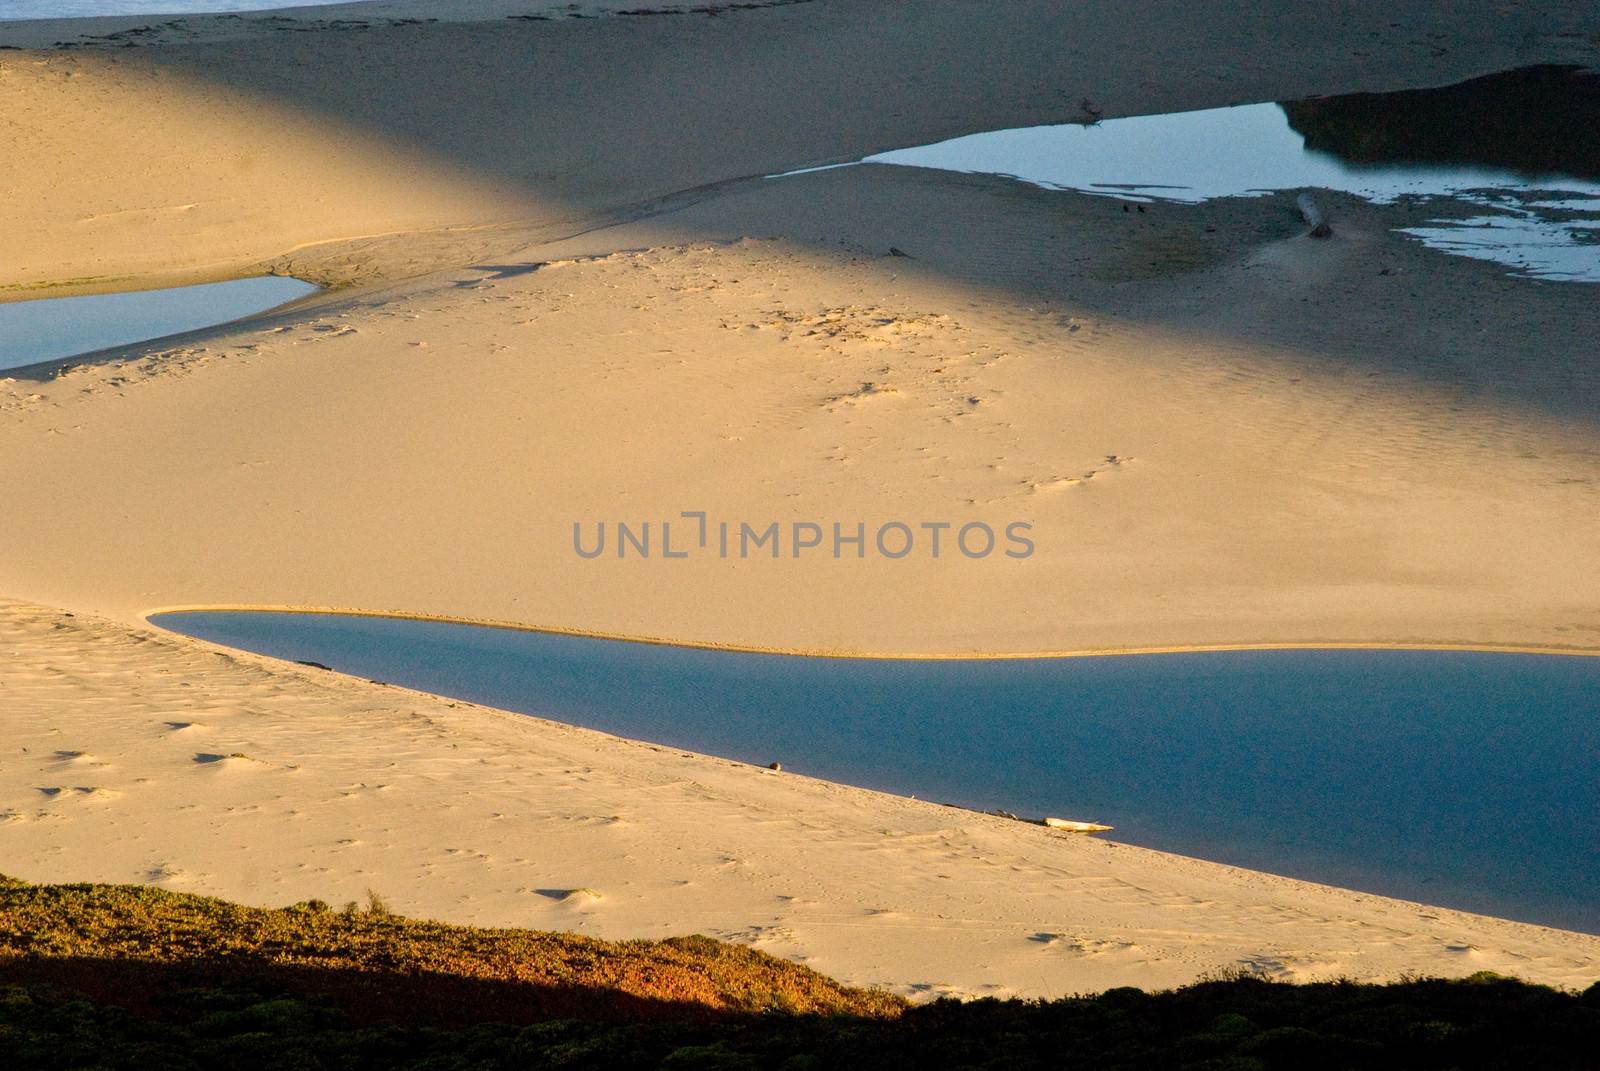 Morning sun highlights contours in sand on beach on Big Sur coastline.